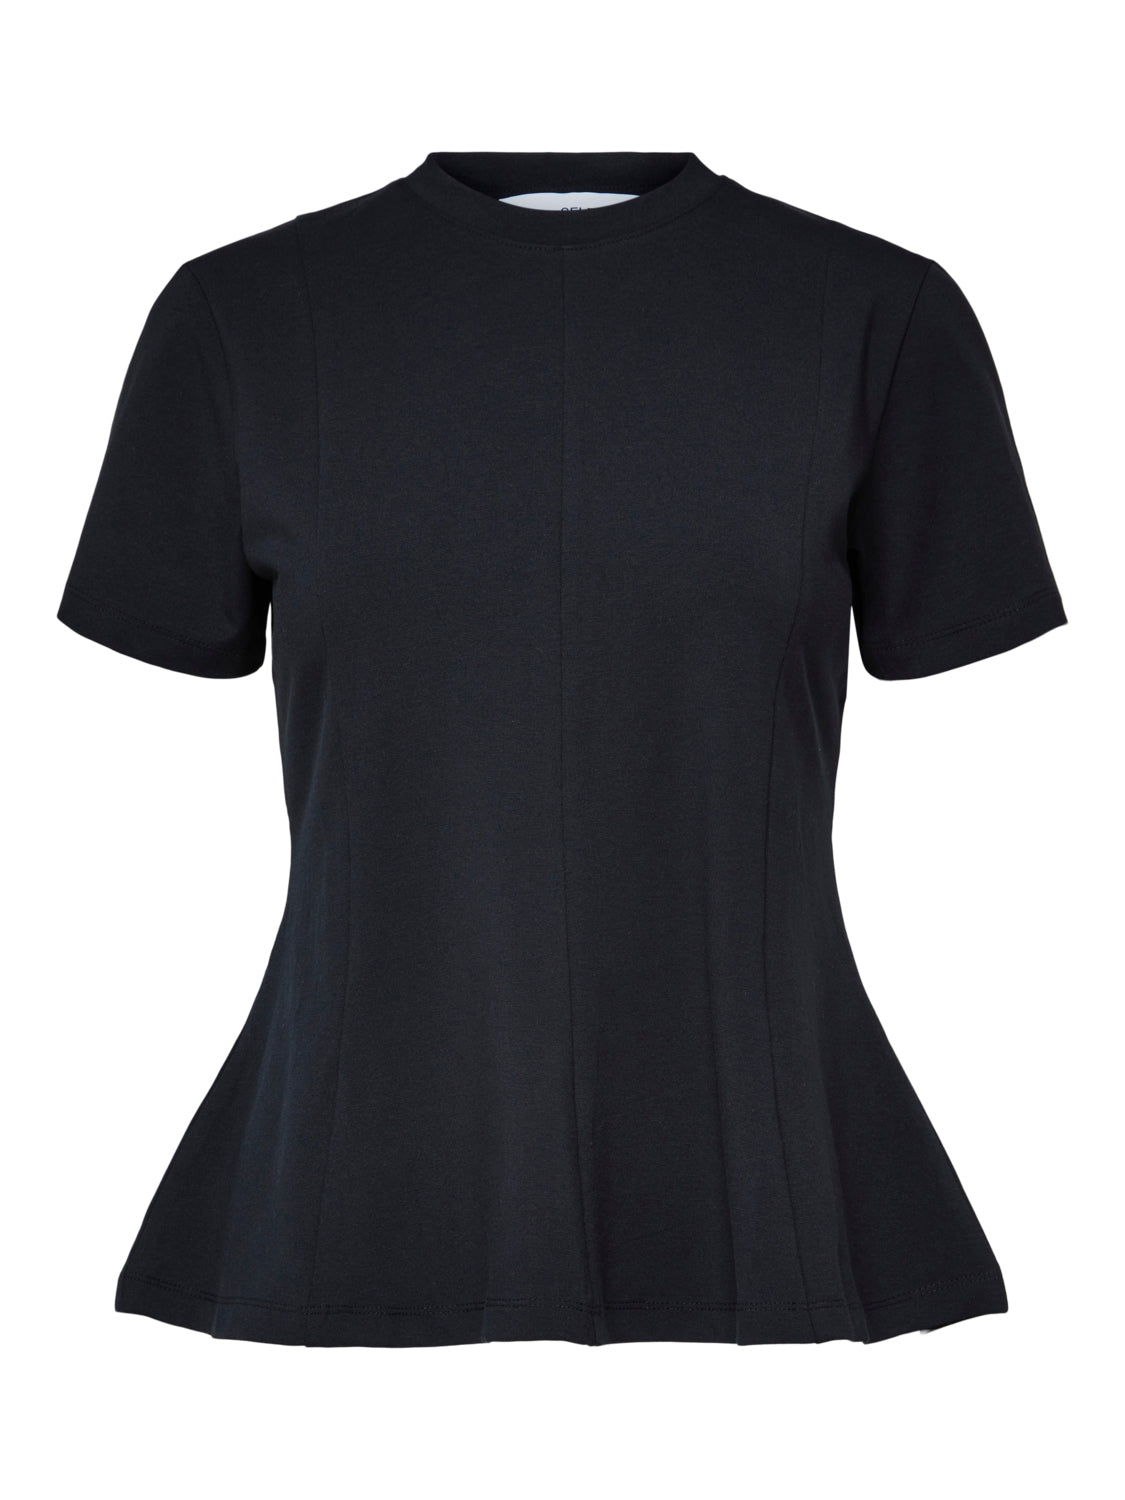 SELECTED FEMME -  VANIA T-Shirt - Black